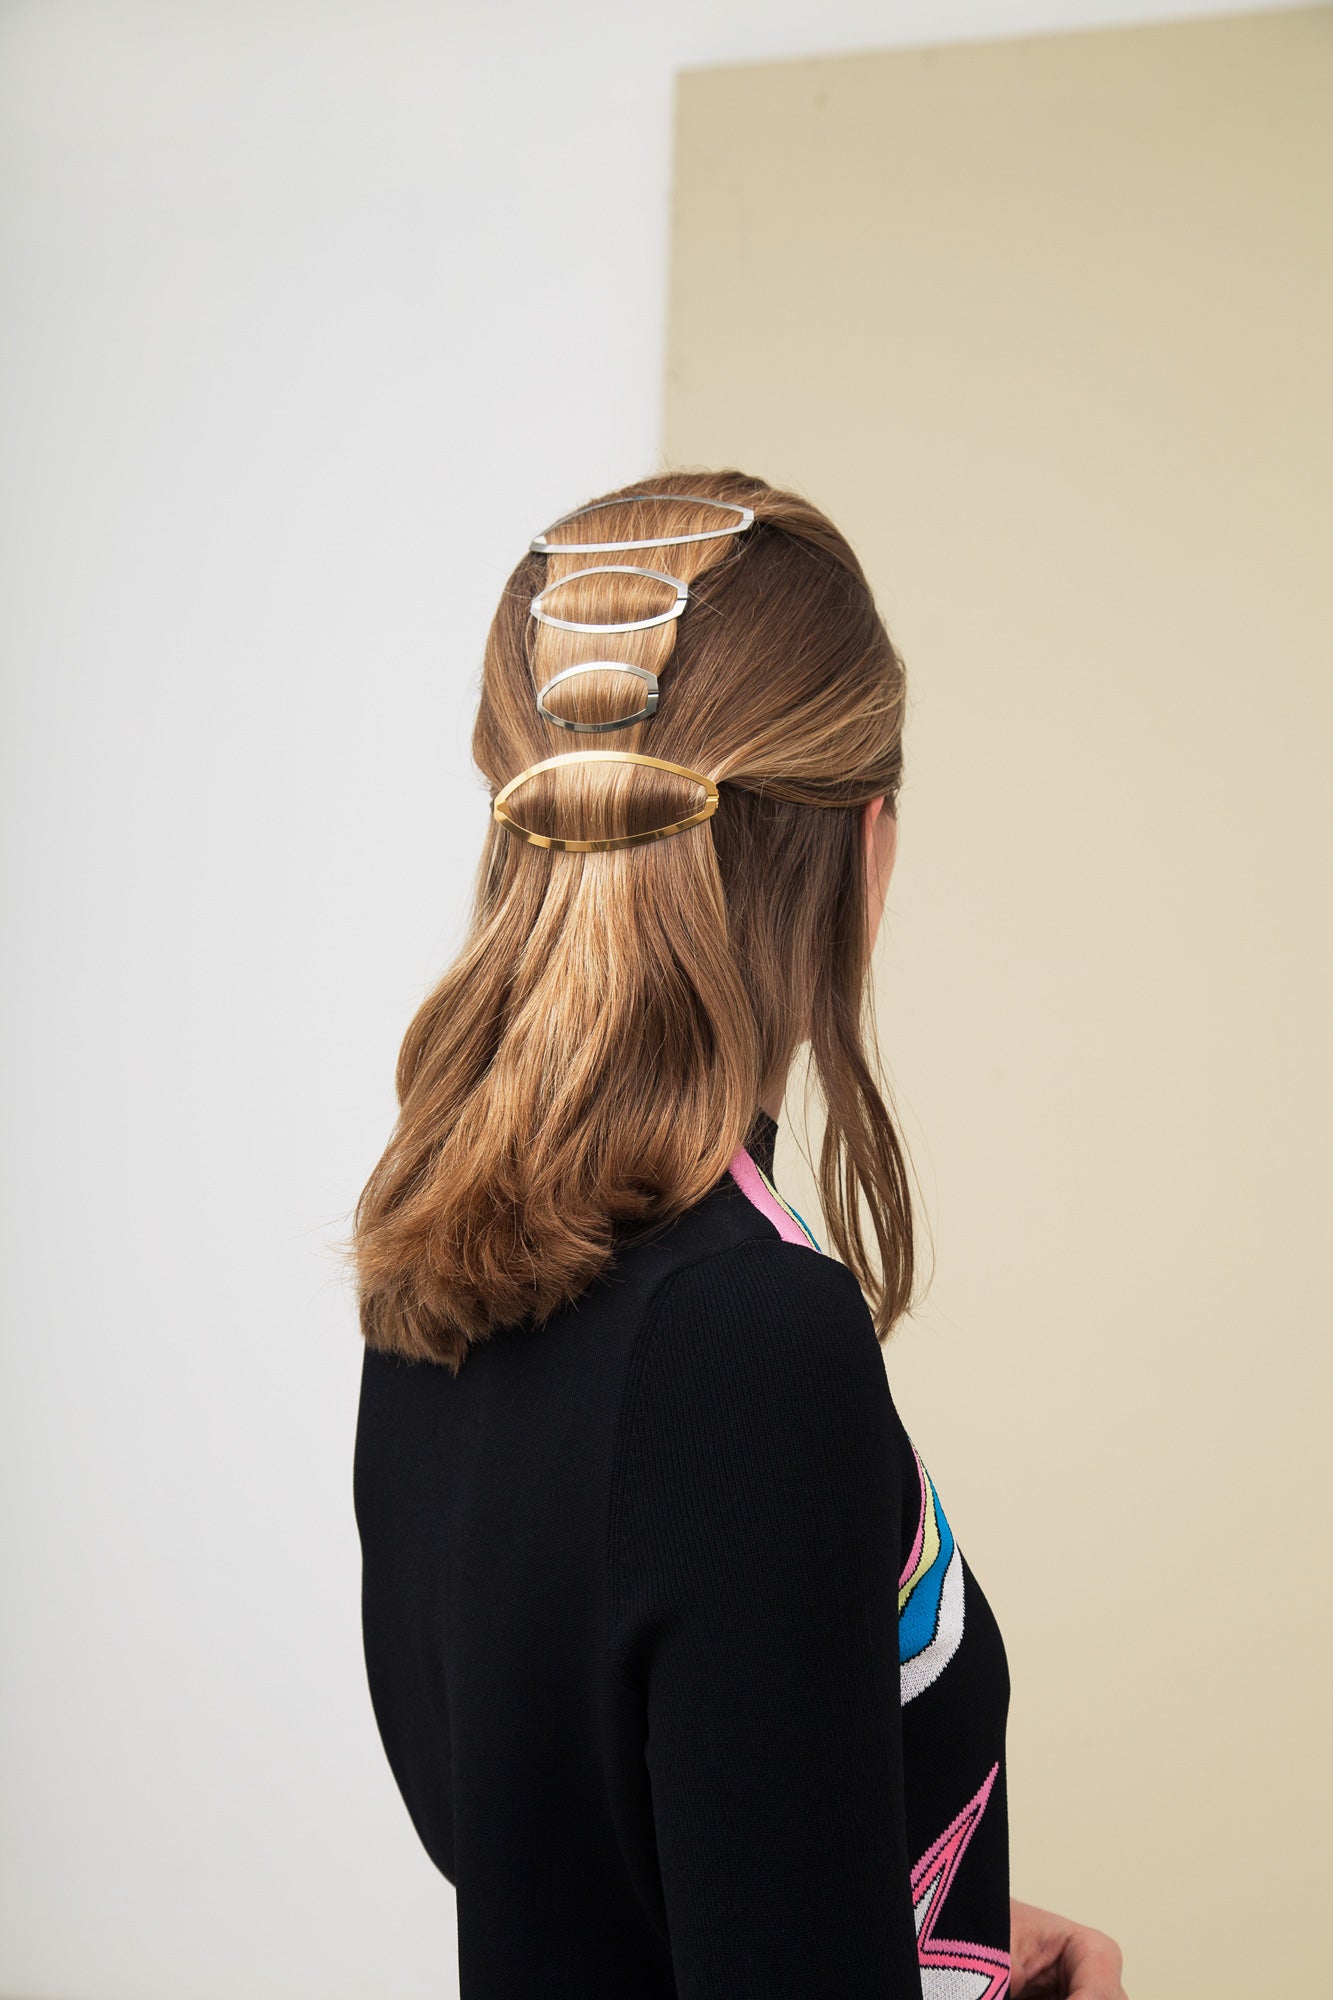 NERI, ALVA and LEONA minimalist designer hair clips. High quality hair accessories handmade in Berlin